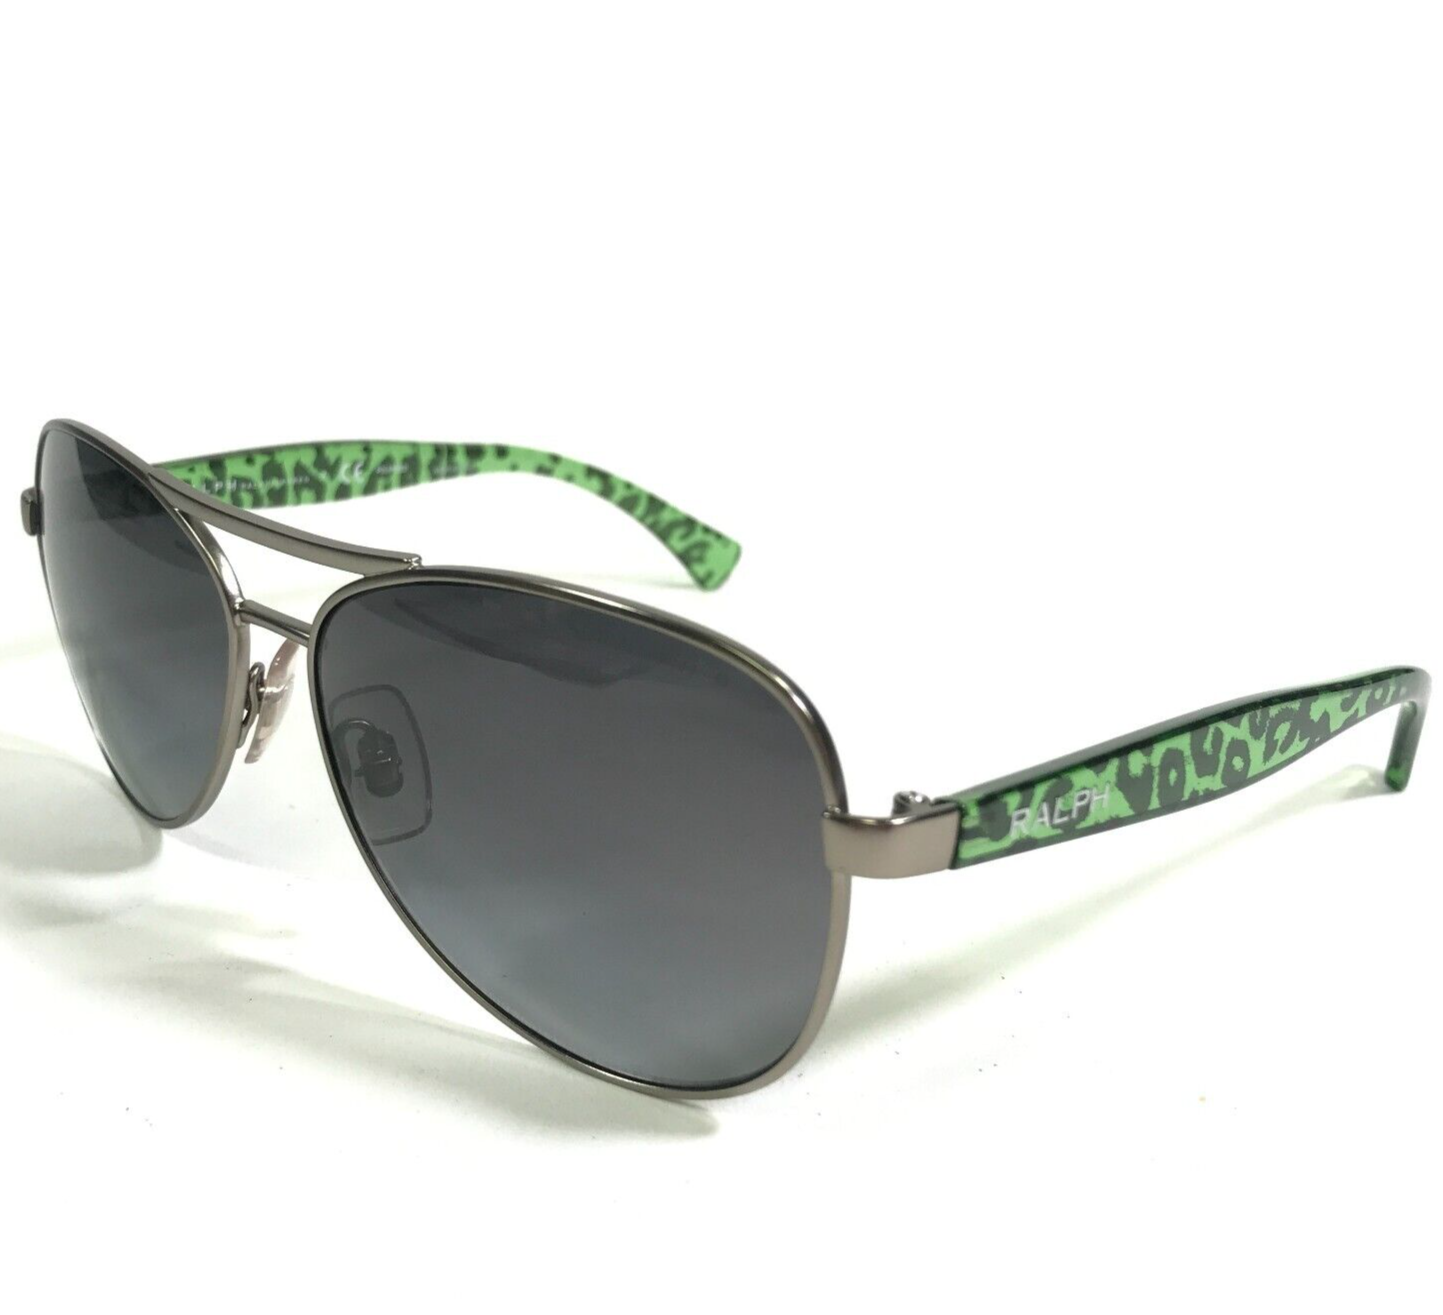 Ralph Lauren Sunglasses RA4108 494/T3 Gray Green Round Frames with Blue Lenses - $55.92